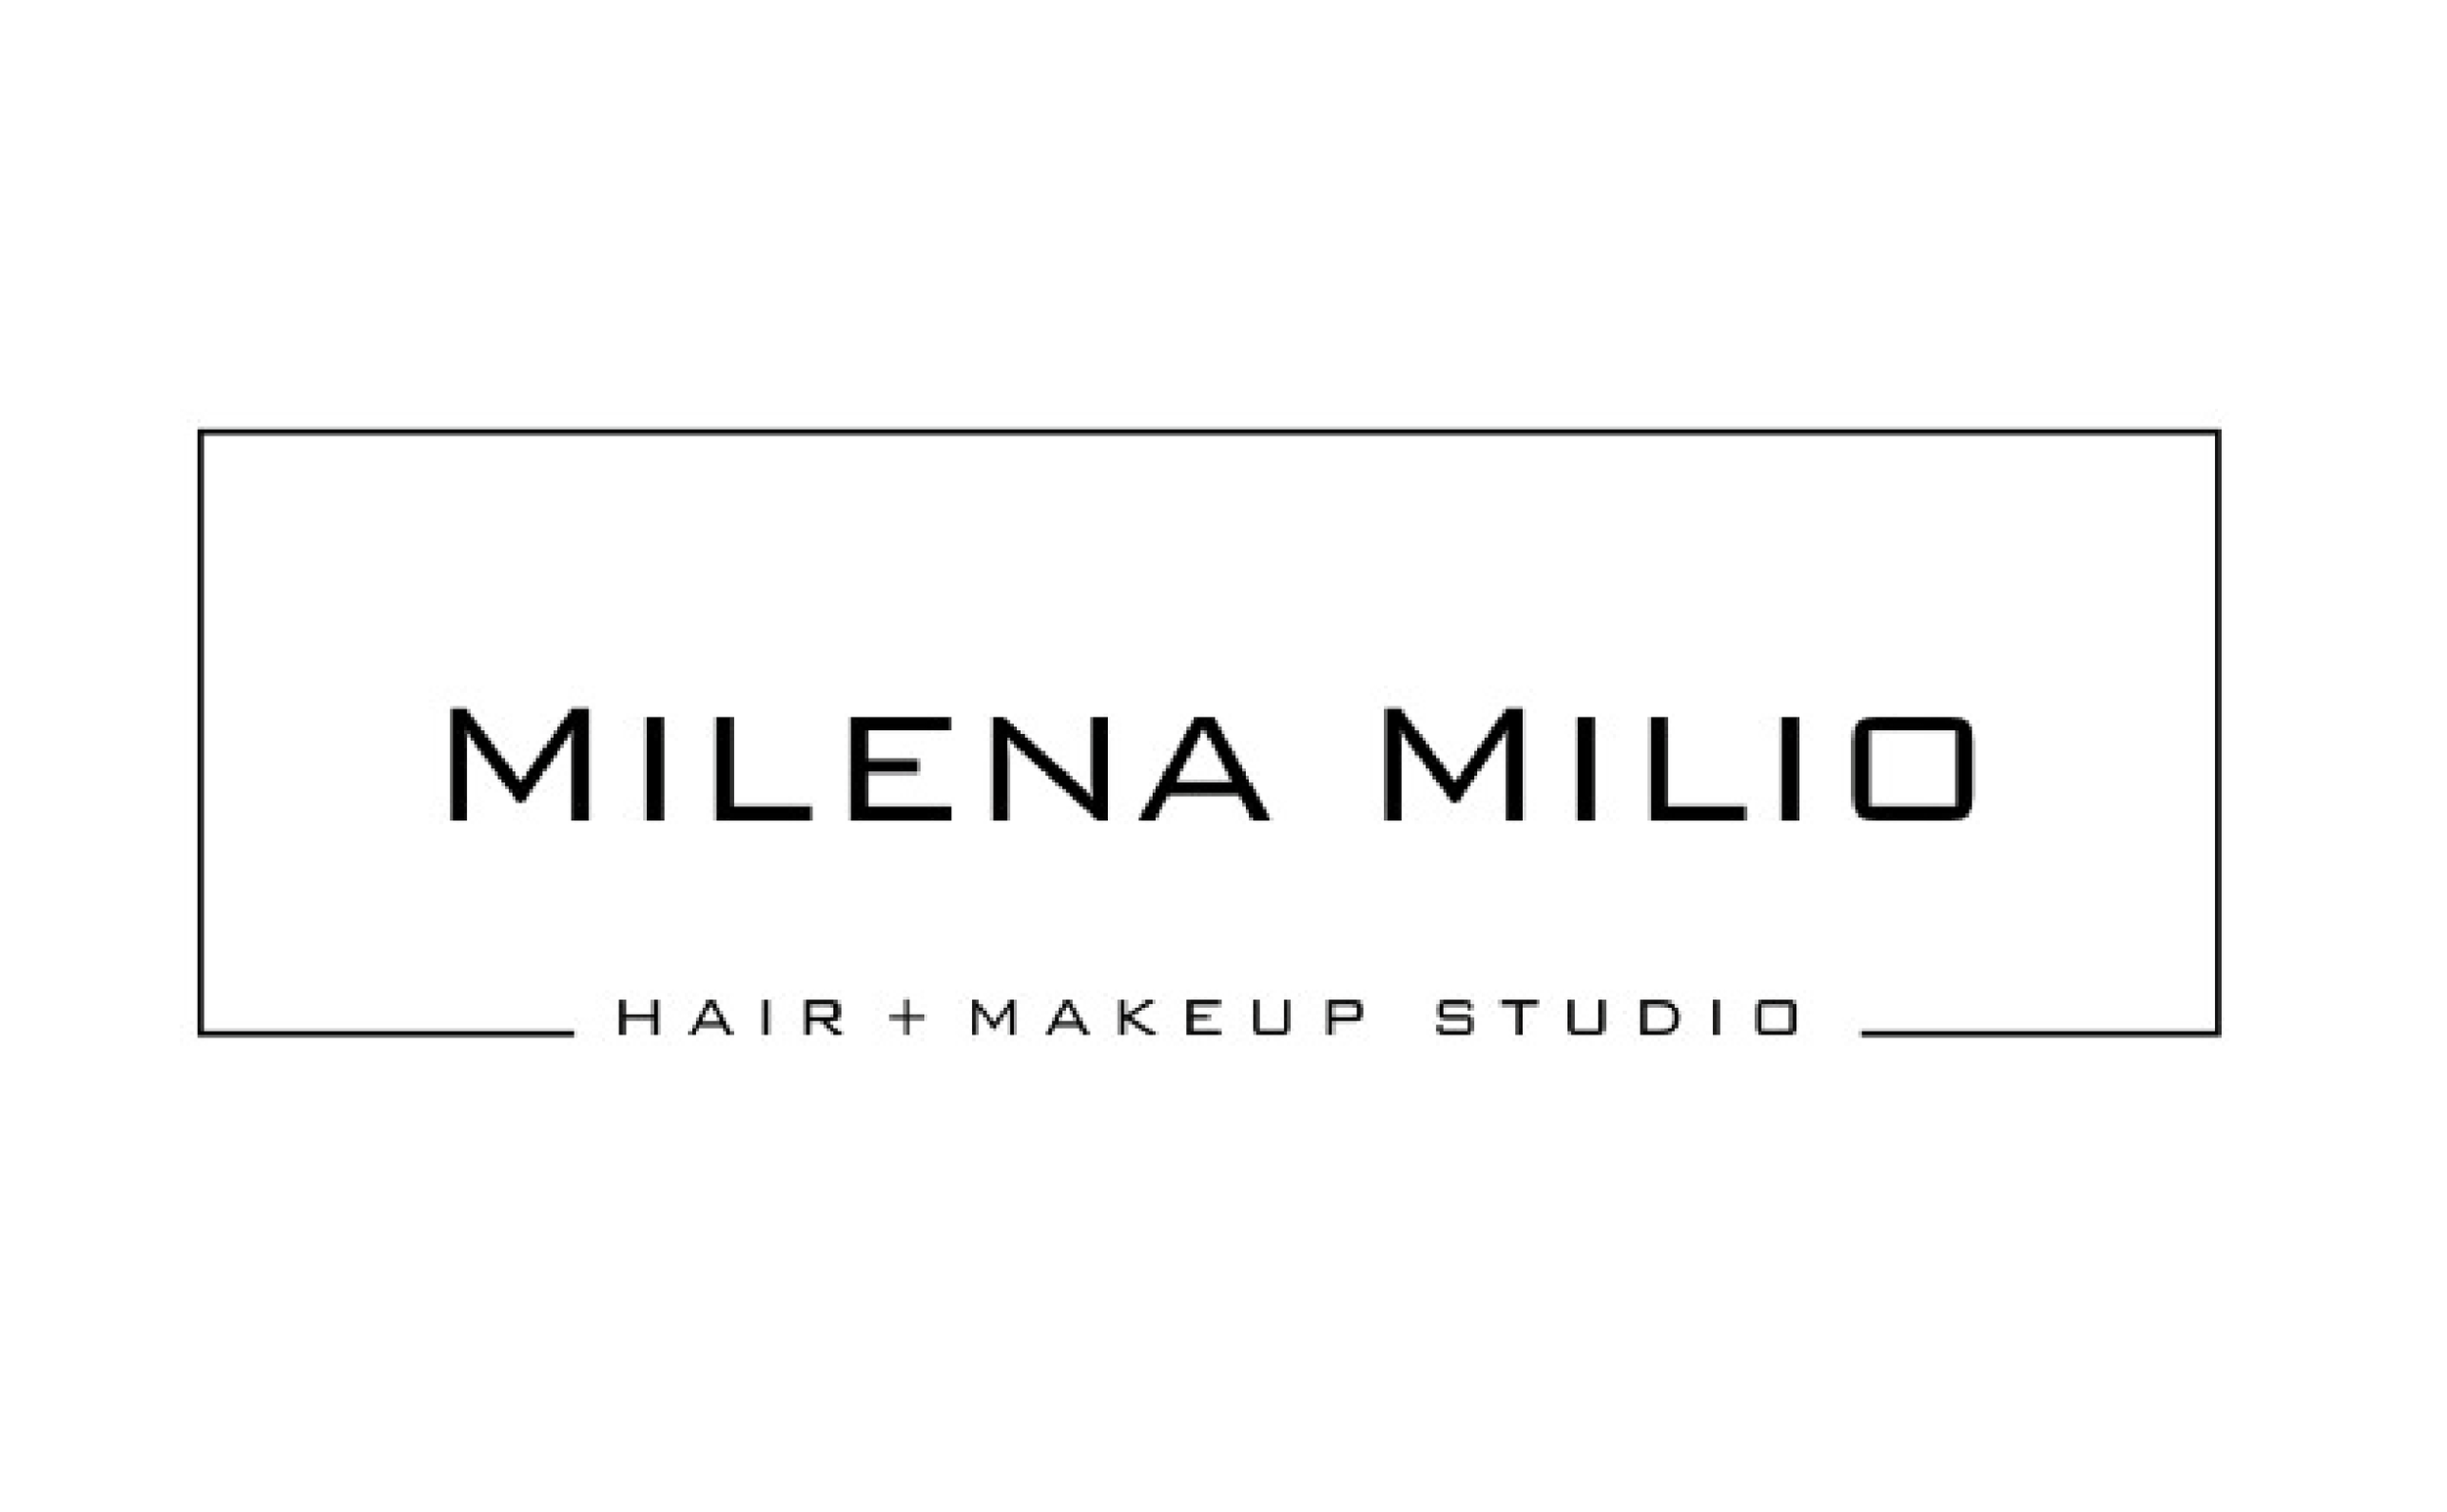 Milena Milio Hair + Makeup Studio